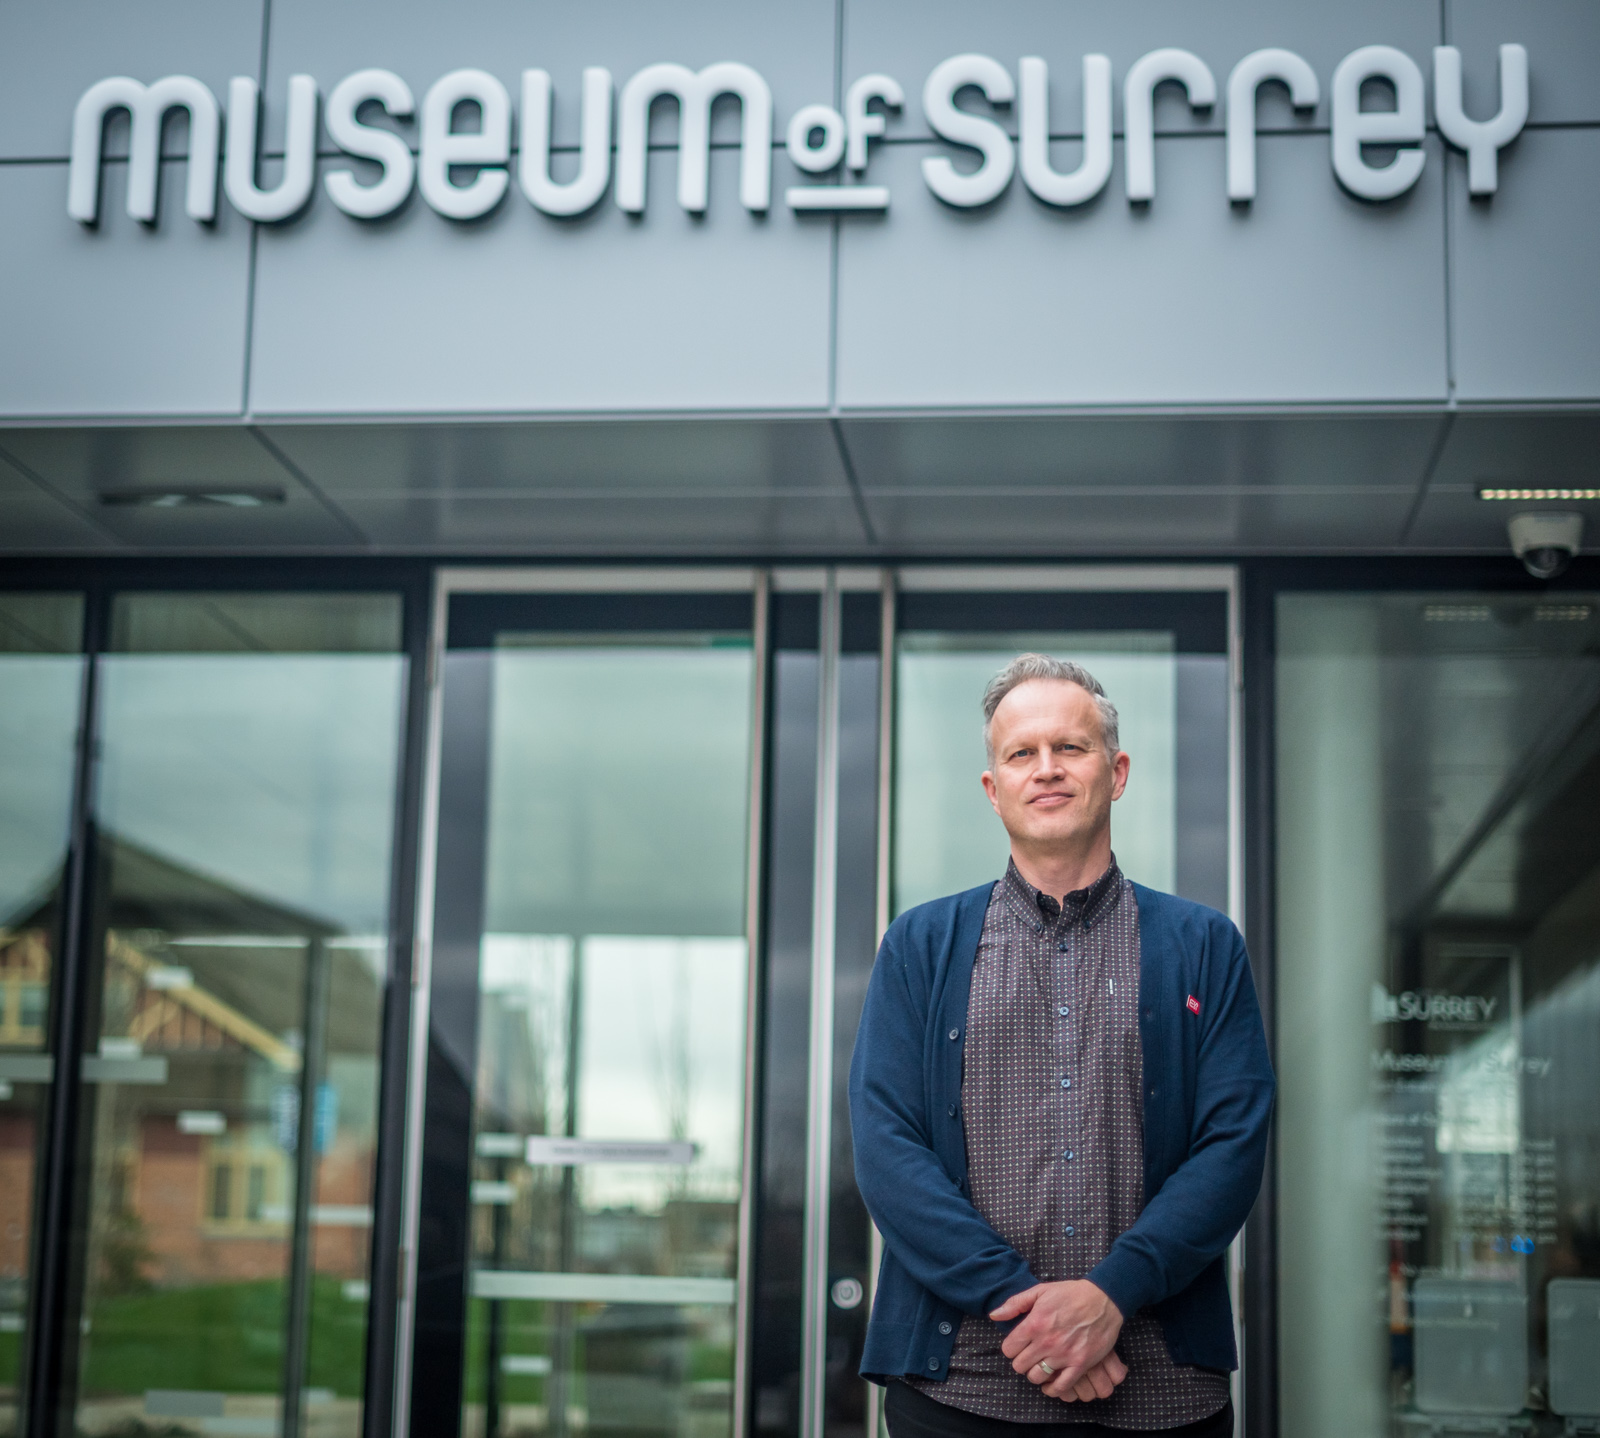 Museum of Surrey manager, Lynn Saffery